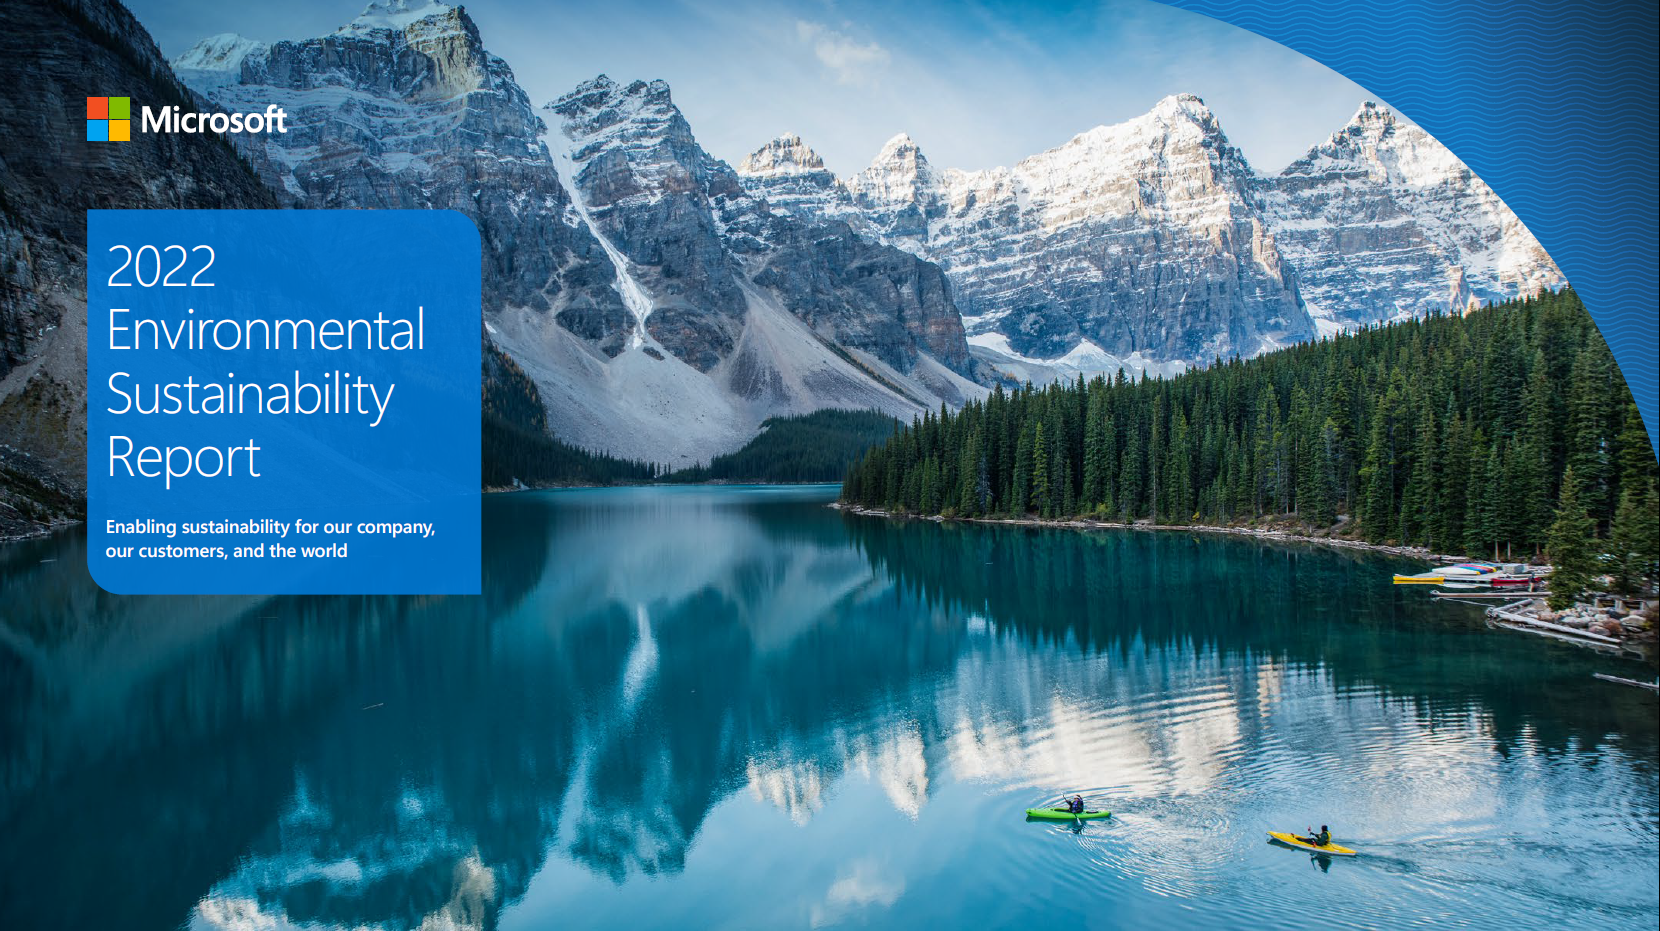 Microsoft's 2022 Environmental Sustainability Report